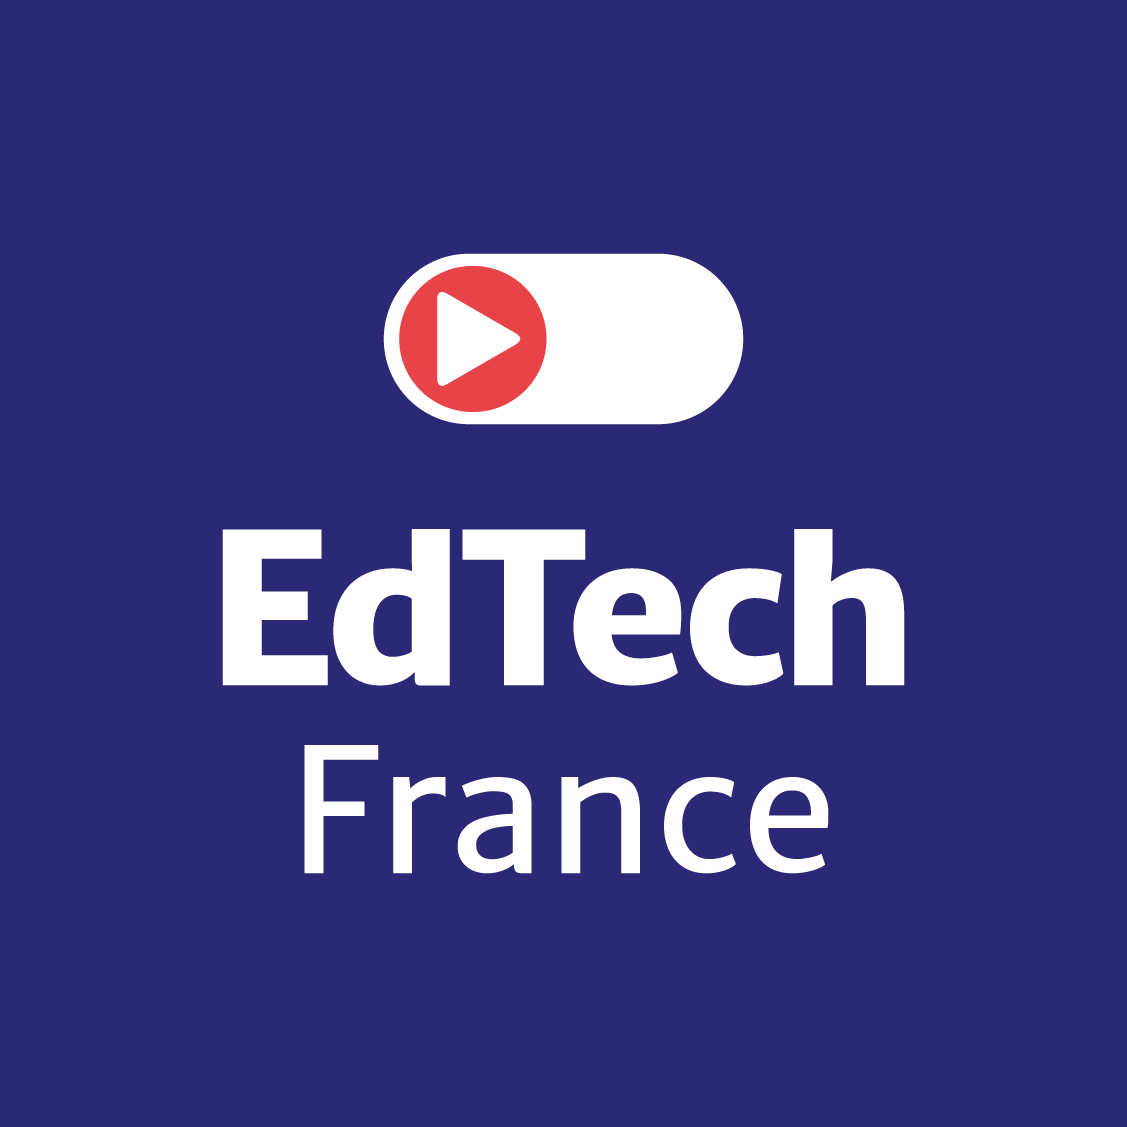 Association EdTech France